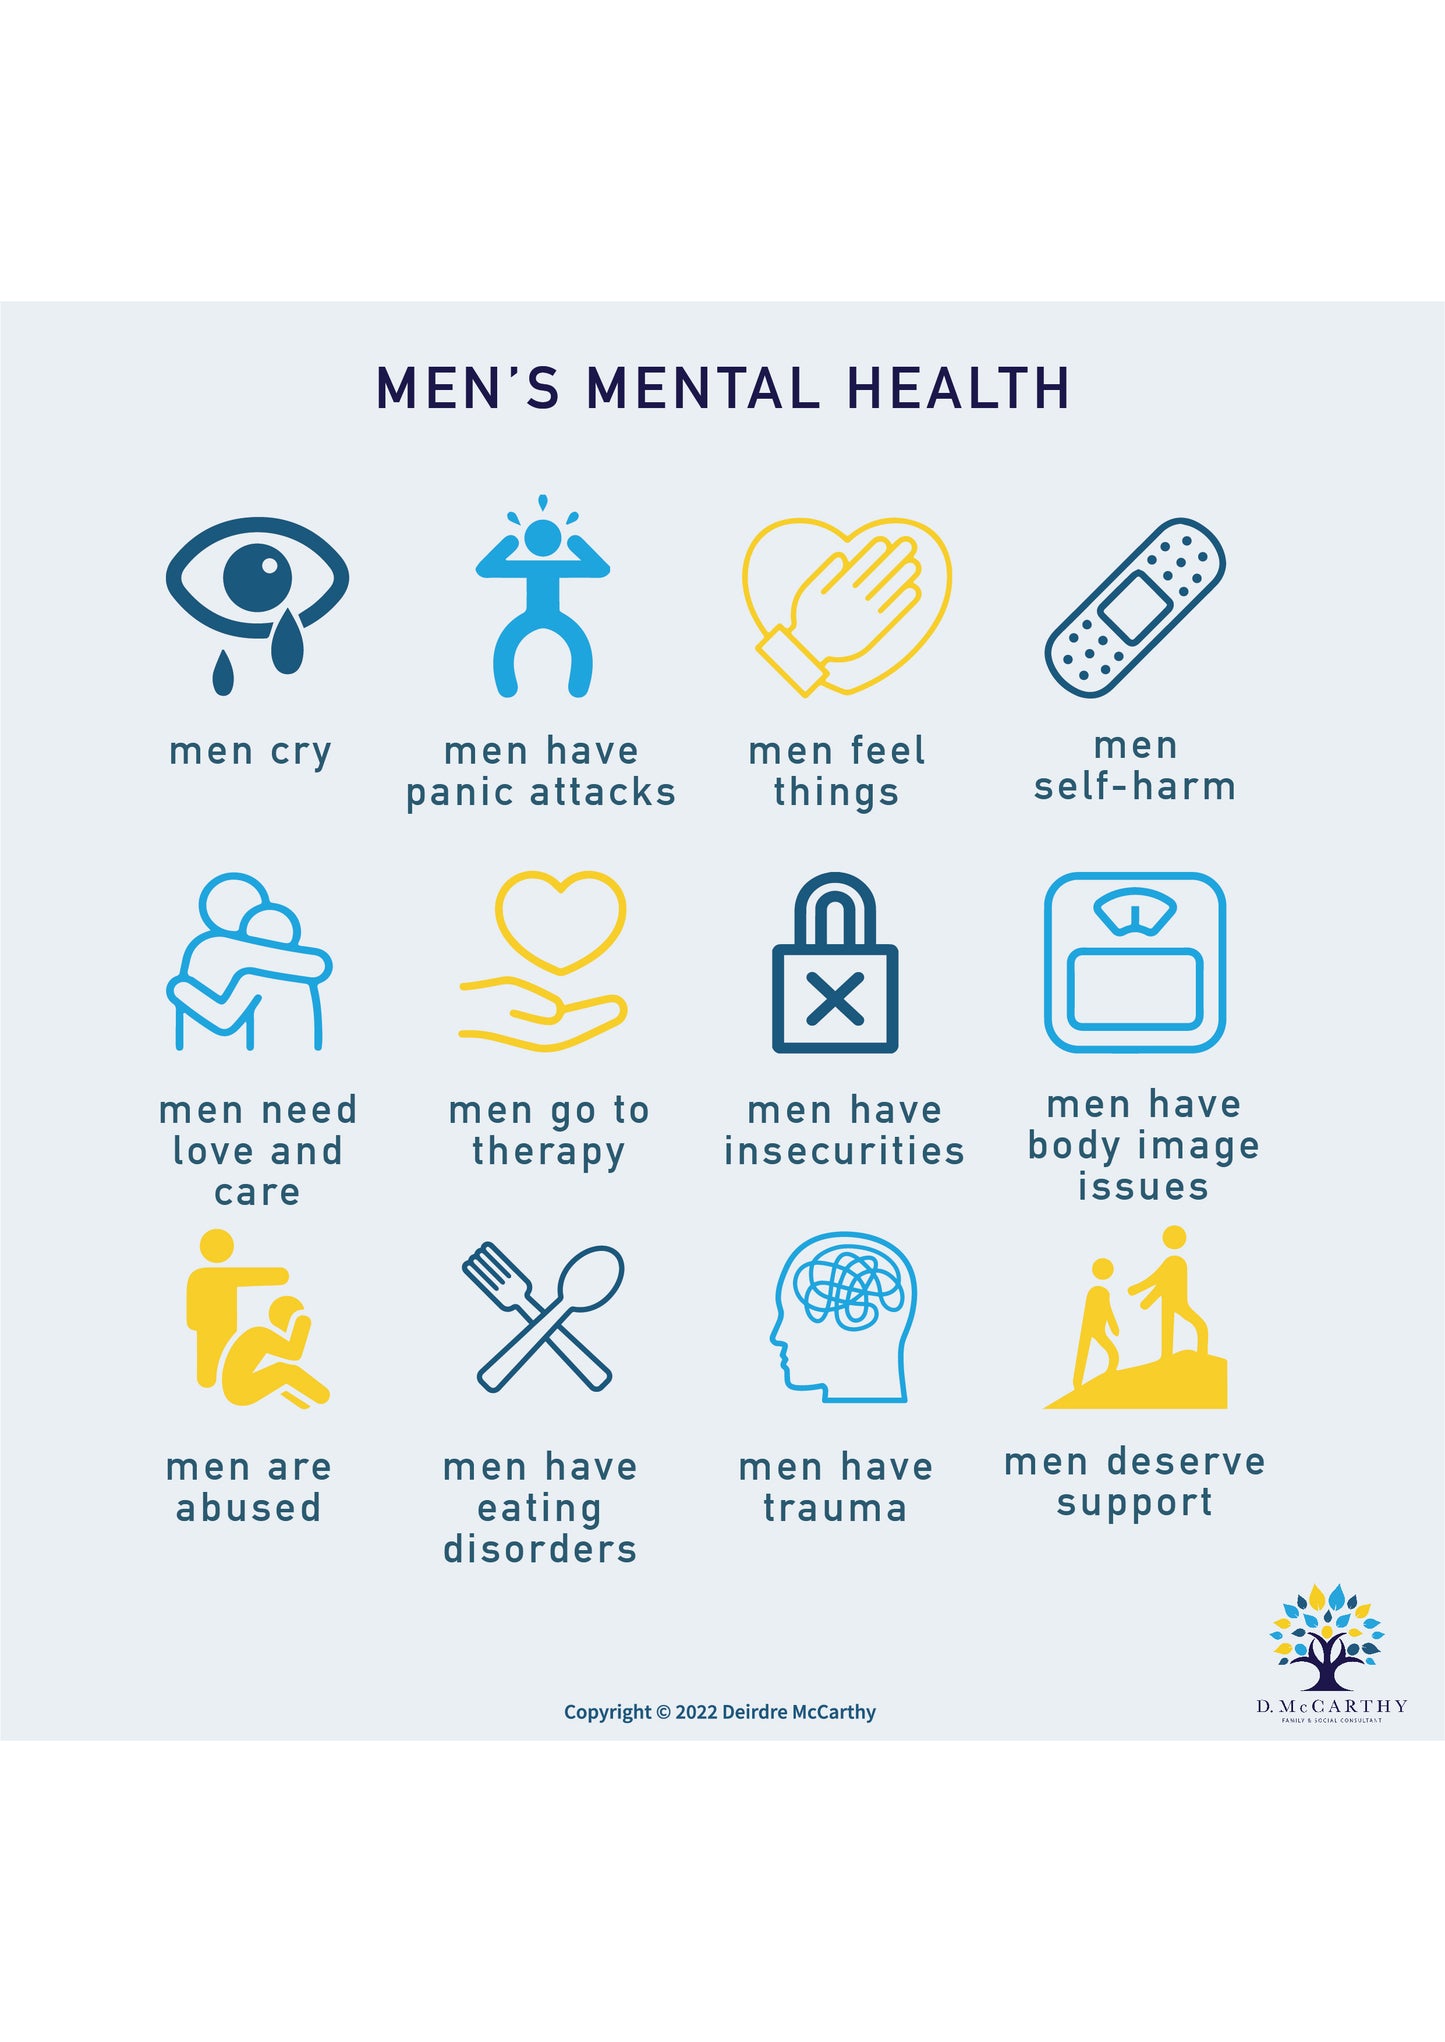 Men's mental health